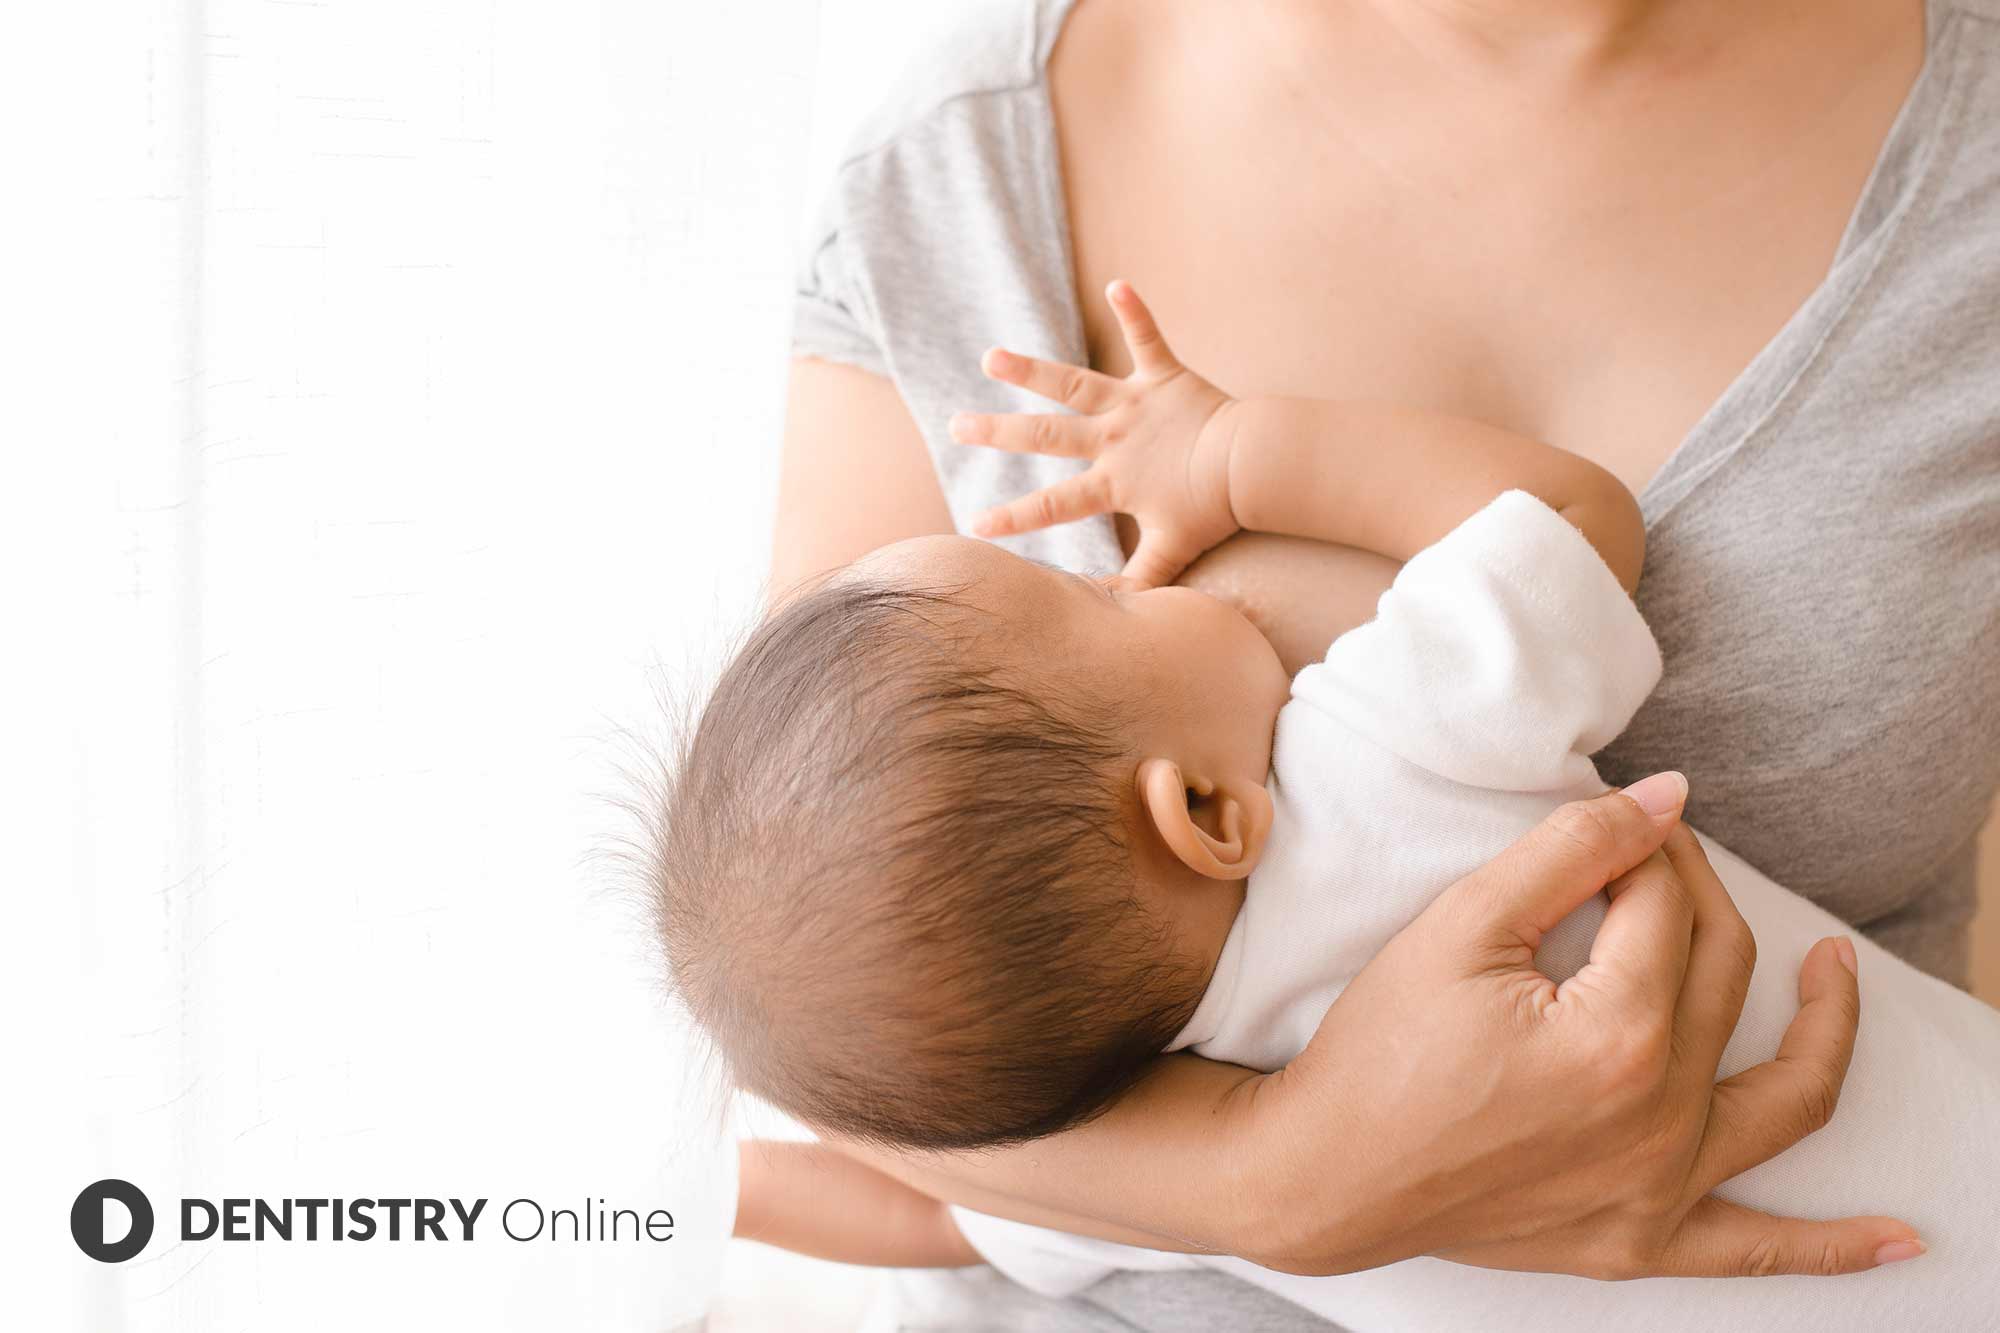 Breastfeeding infants for six months reduces dental disease